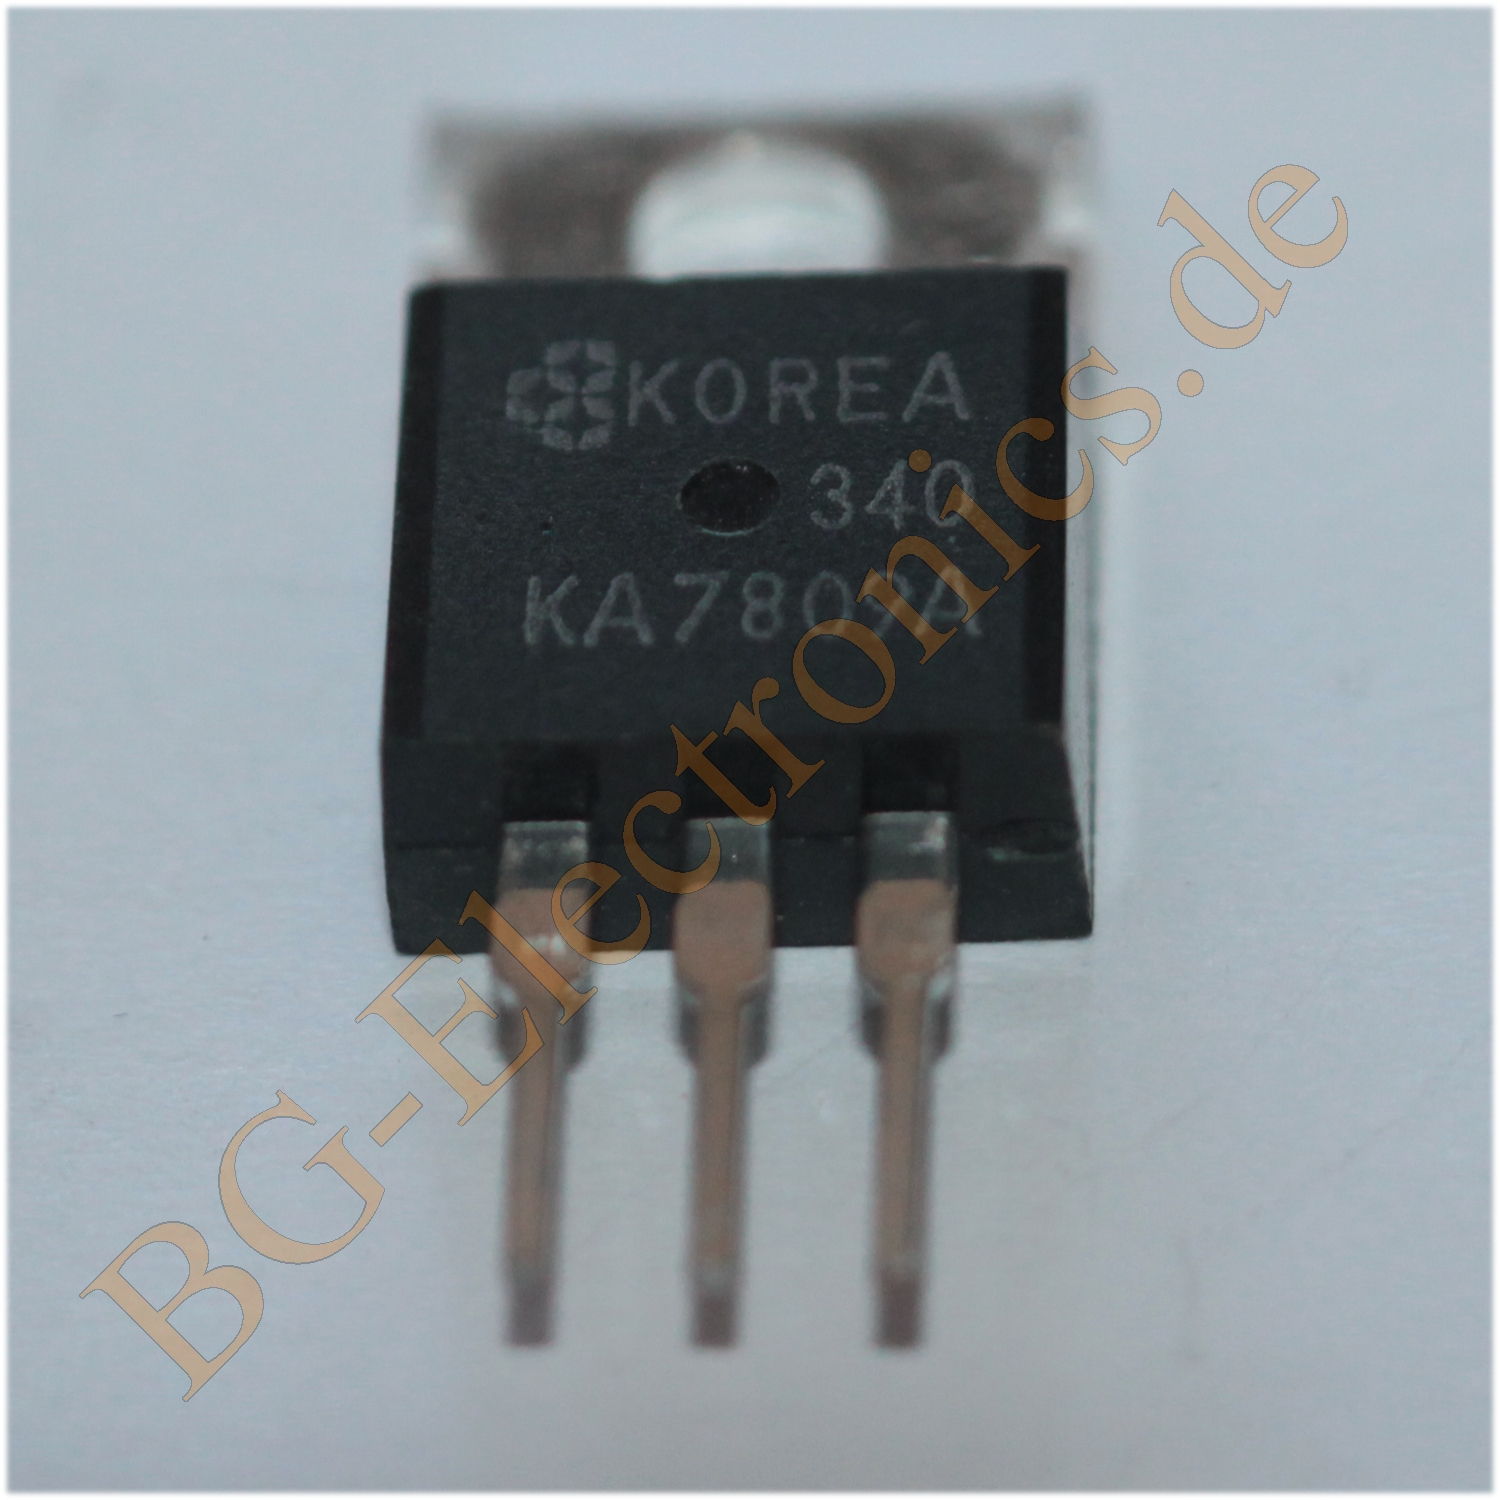 KA7809A short Pins